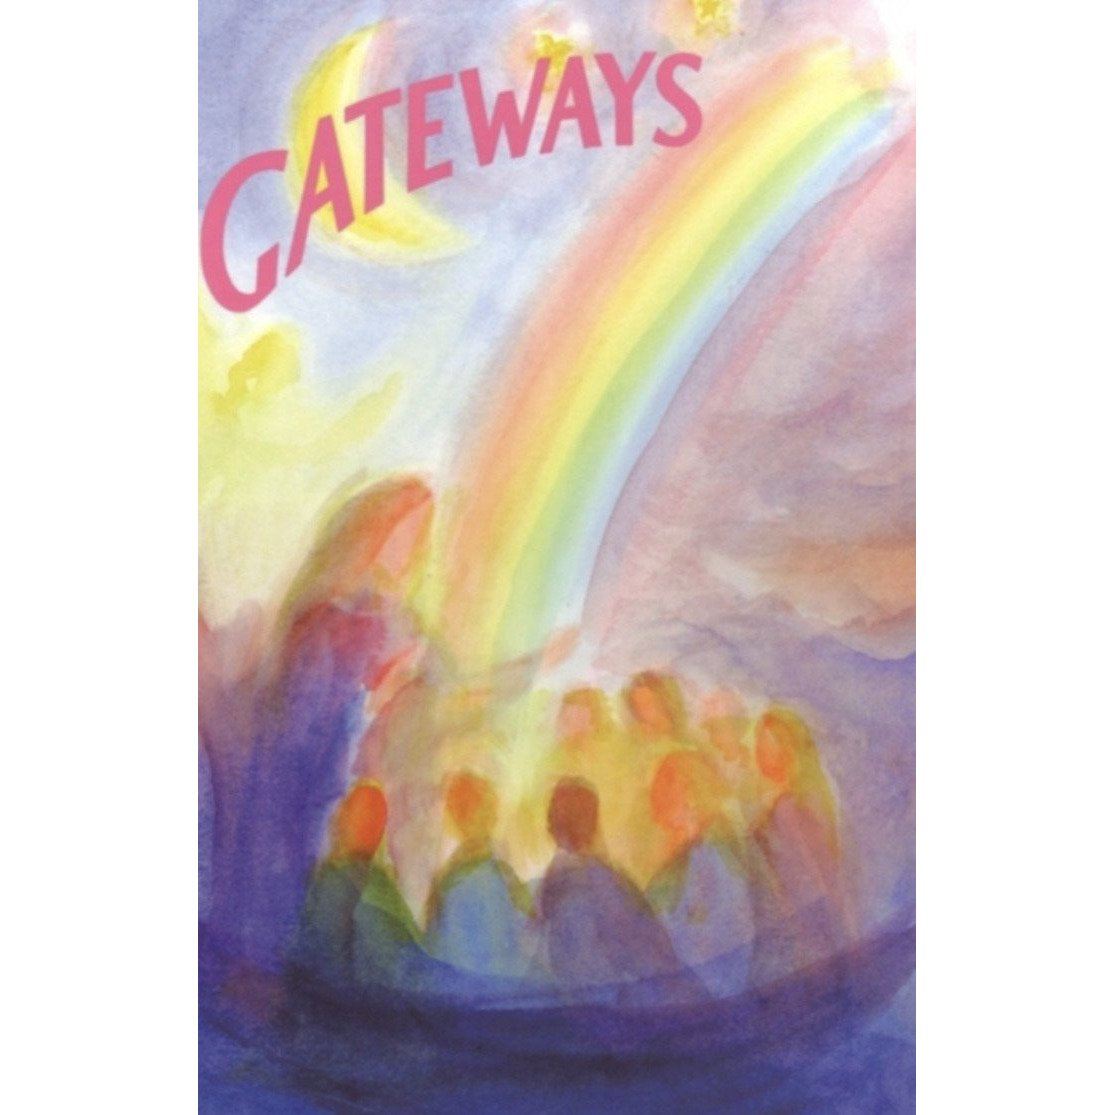 Wynstones Gateways: Poems, Songs and Stories - Alder & Alouette